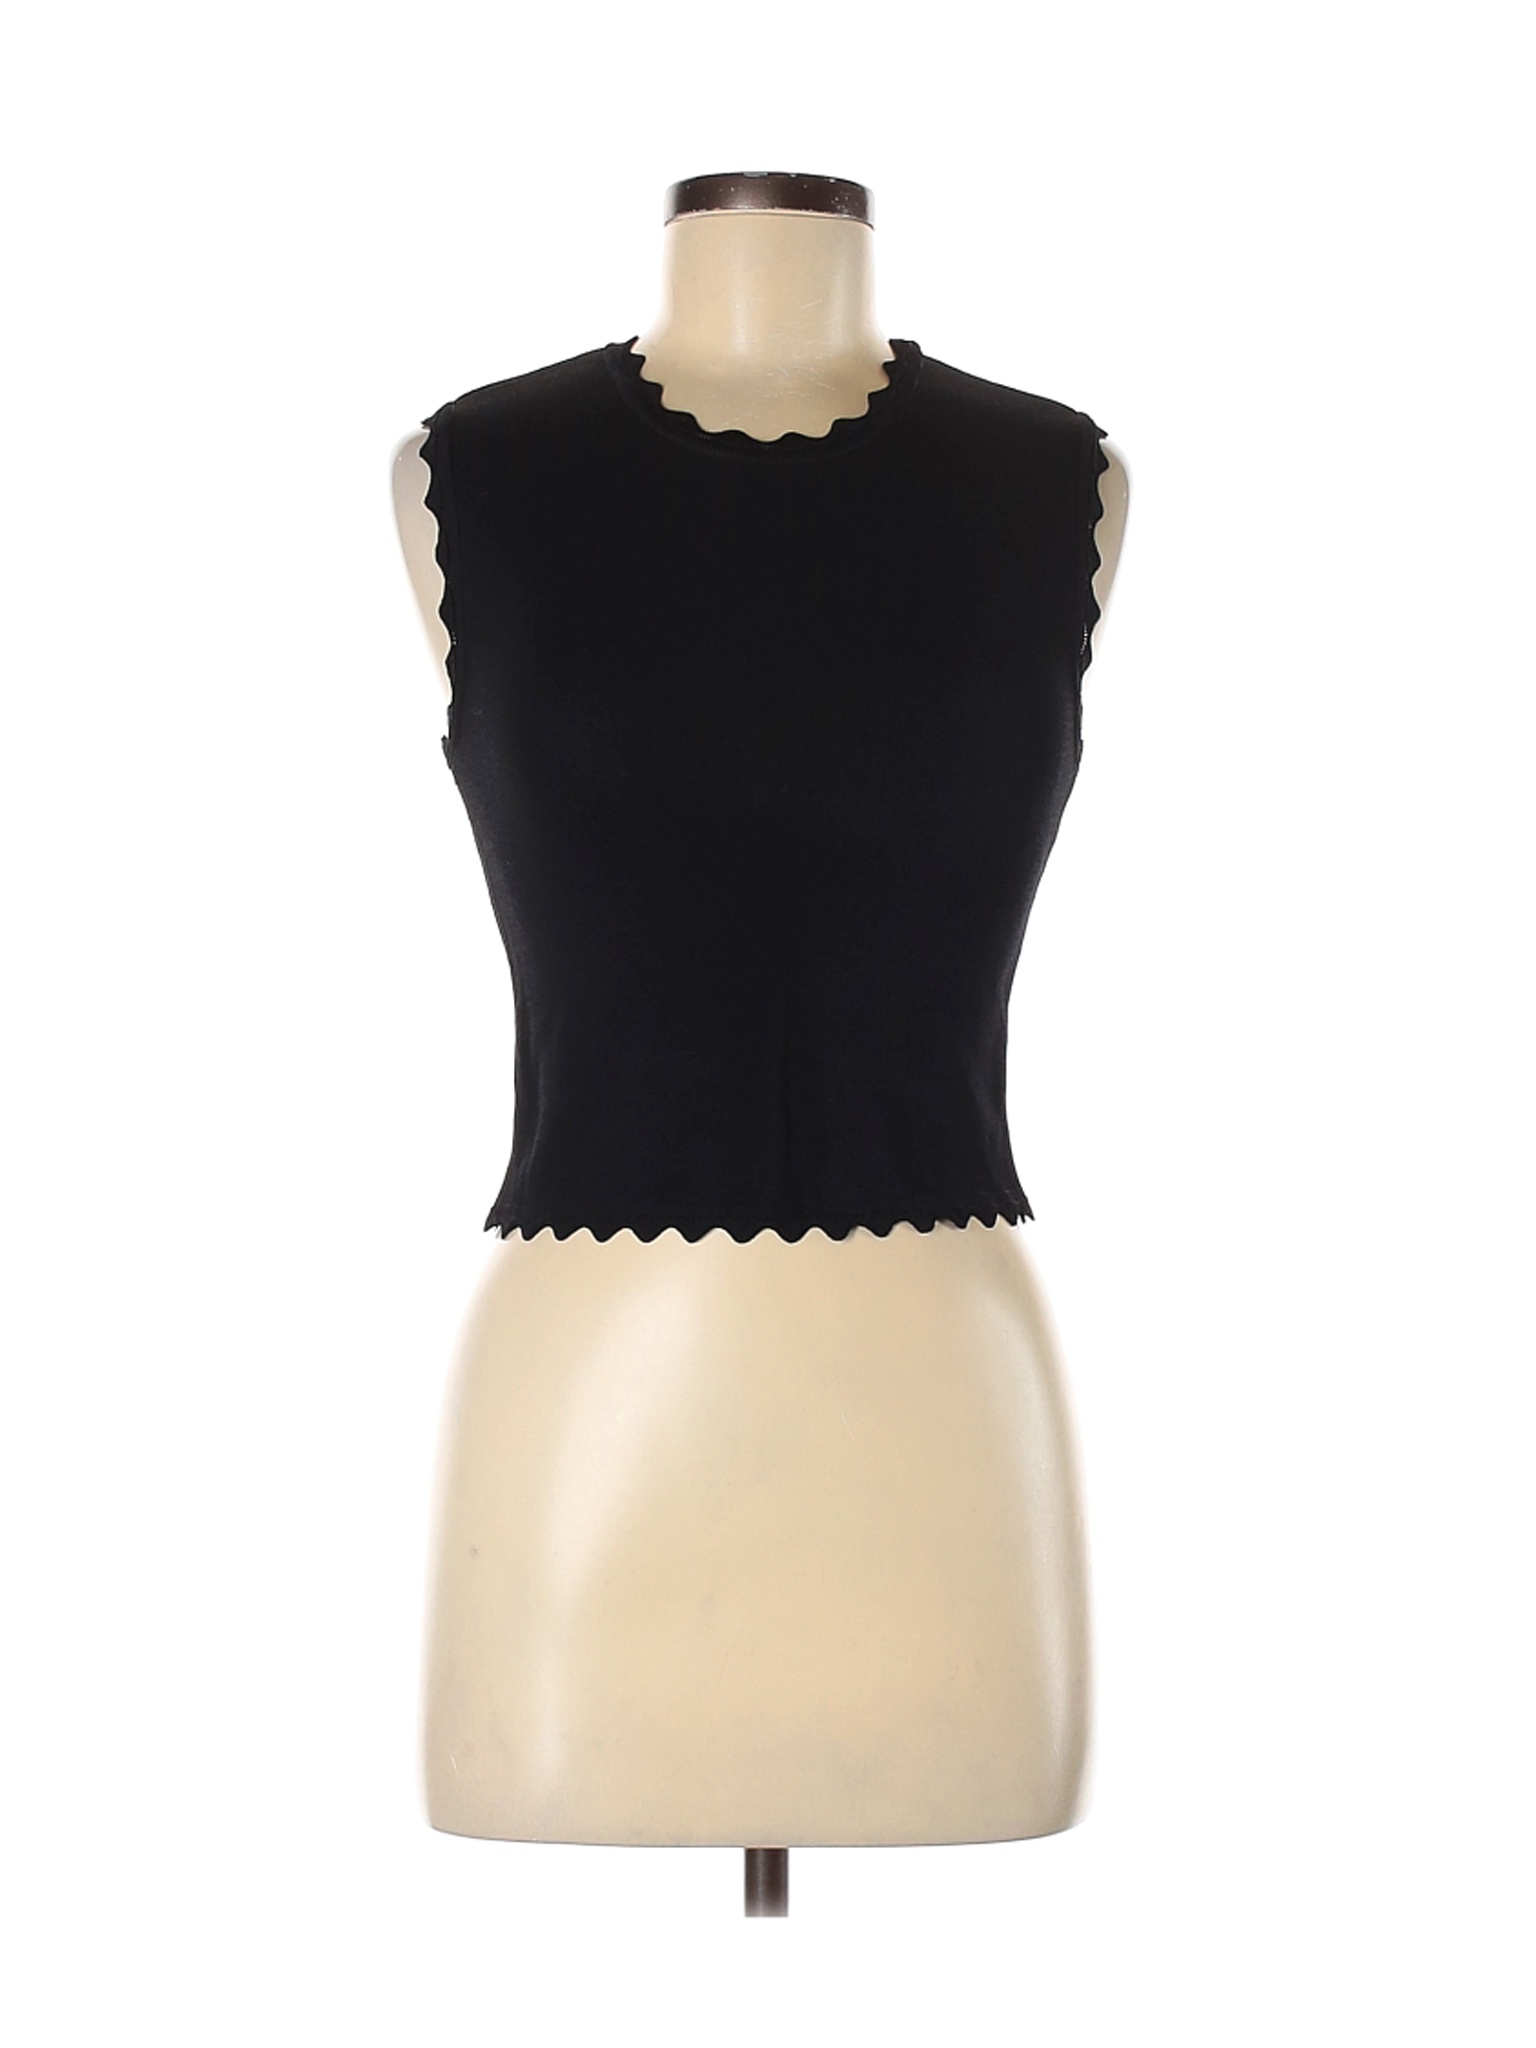 Zara Women Black Sleeveless Blouse M | eBay